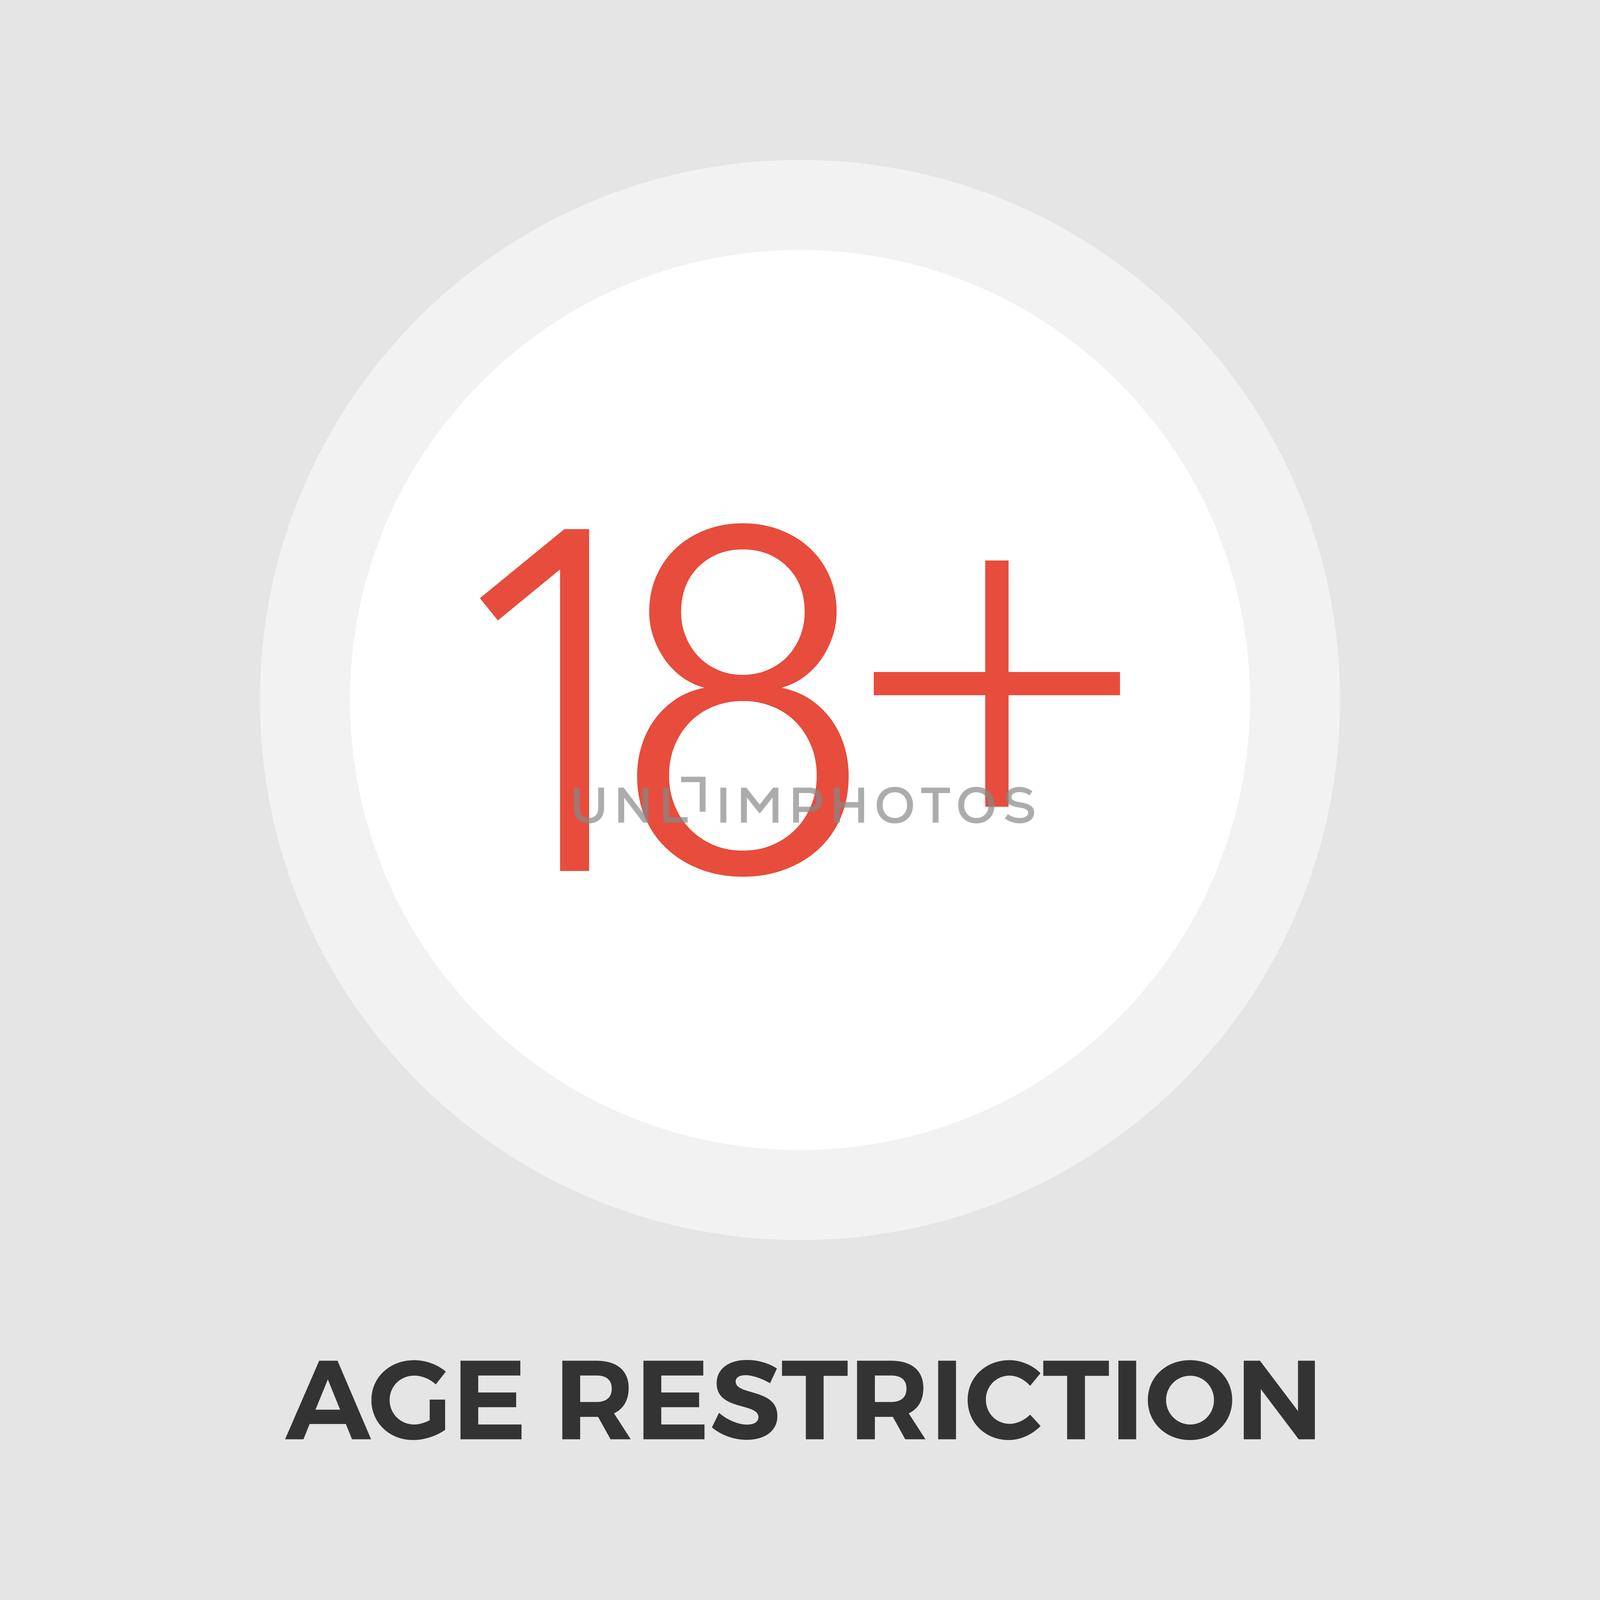 Age Restriction Flat Icon by smoki